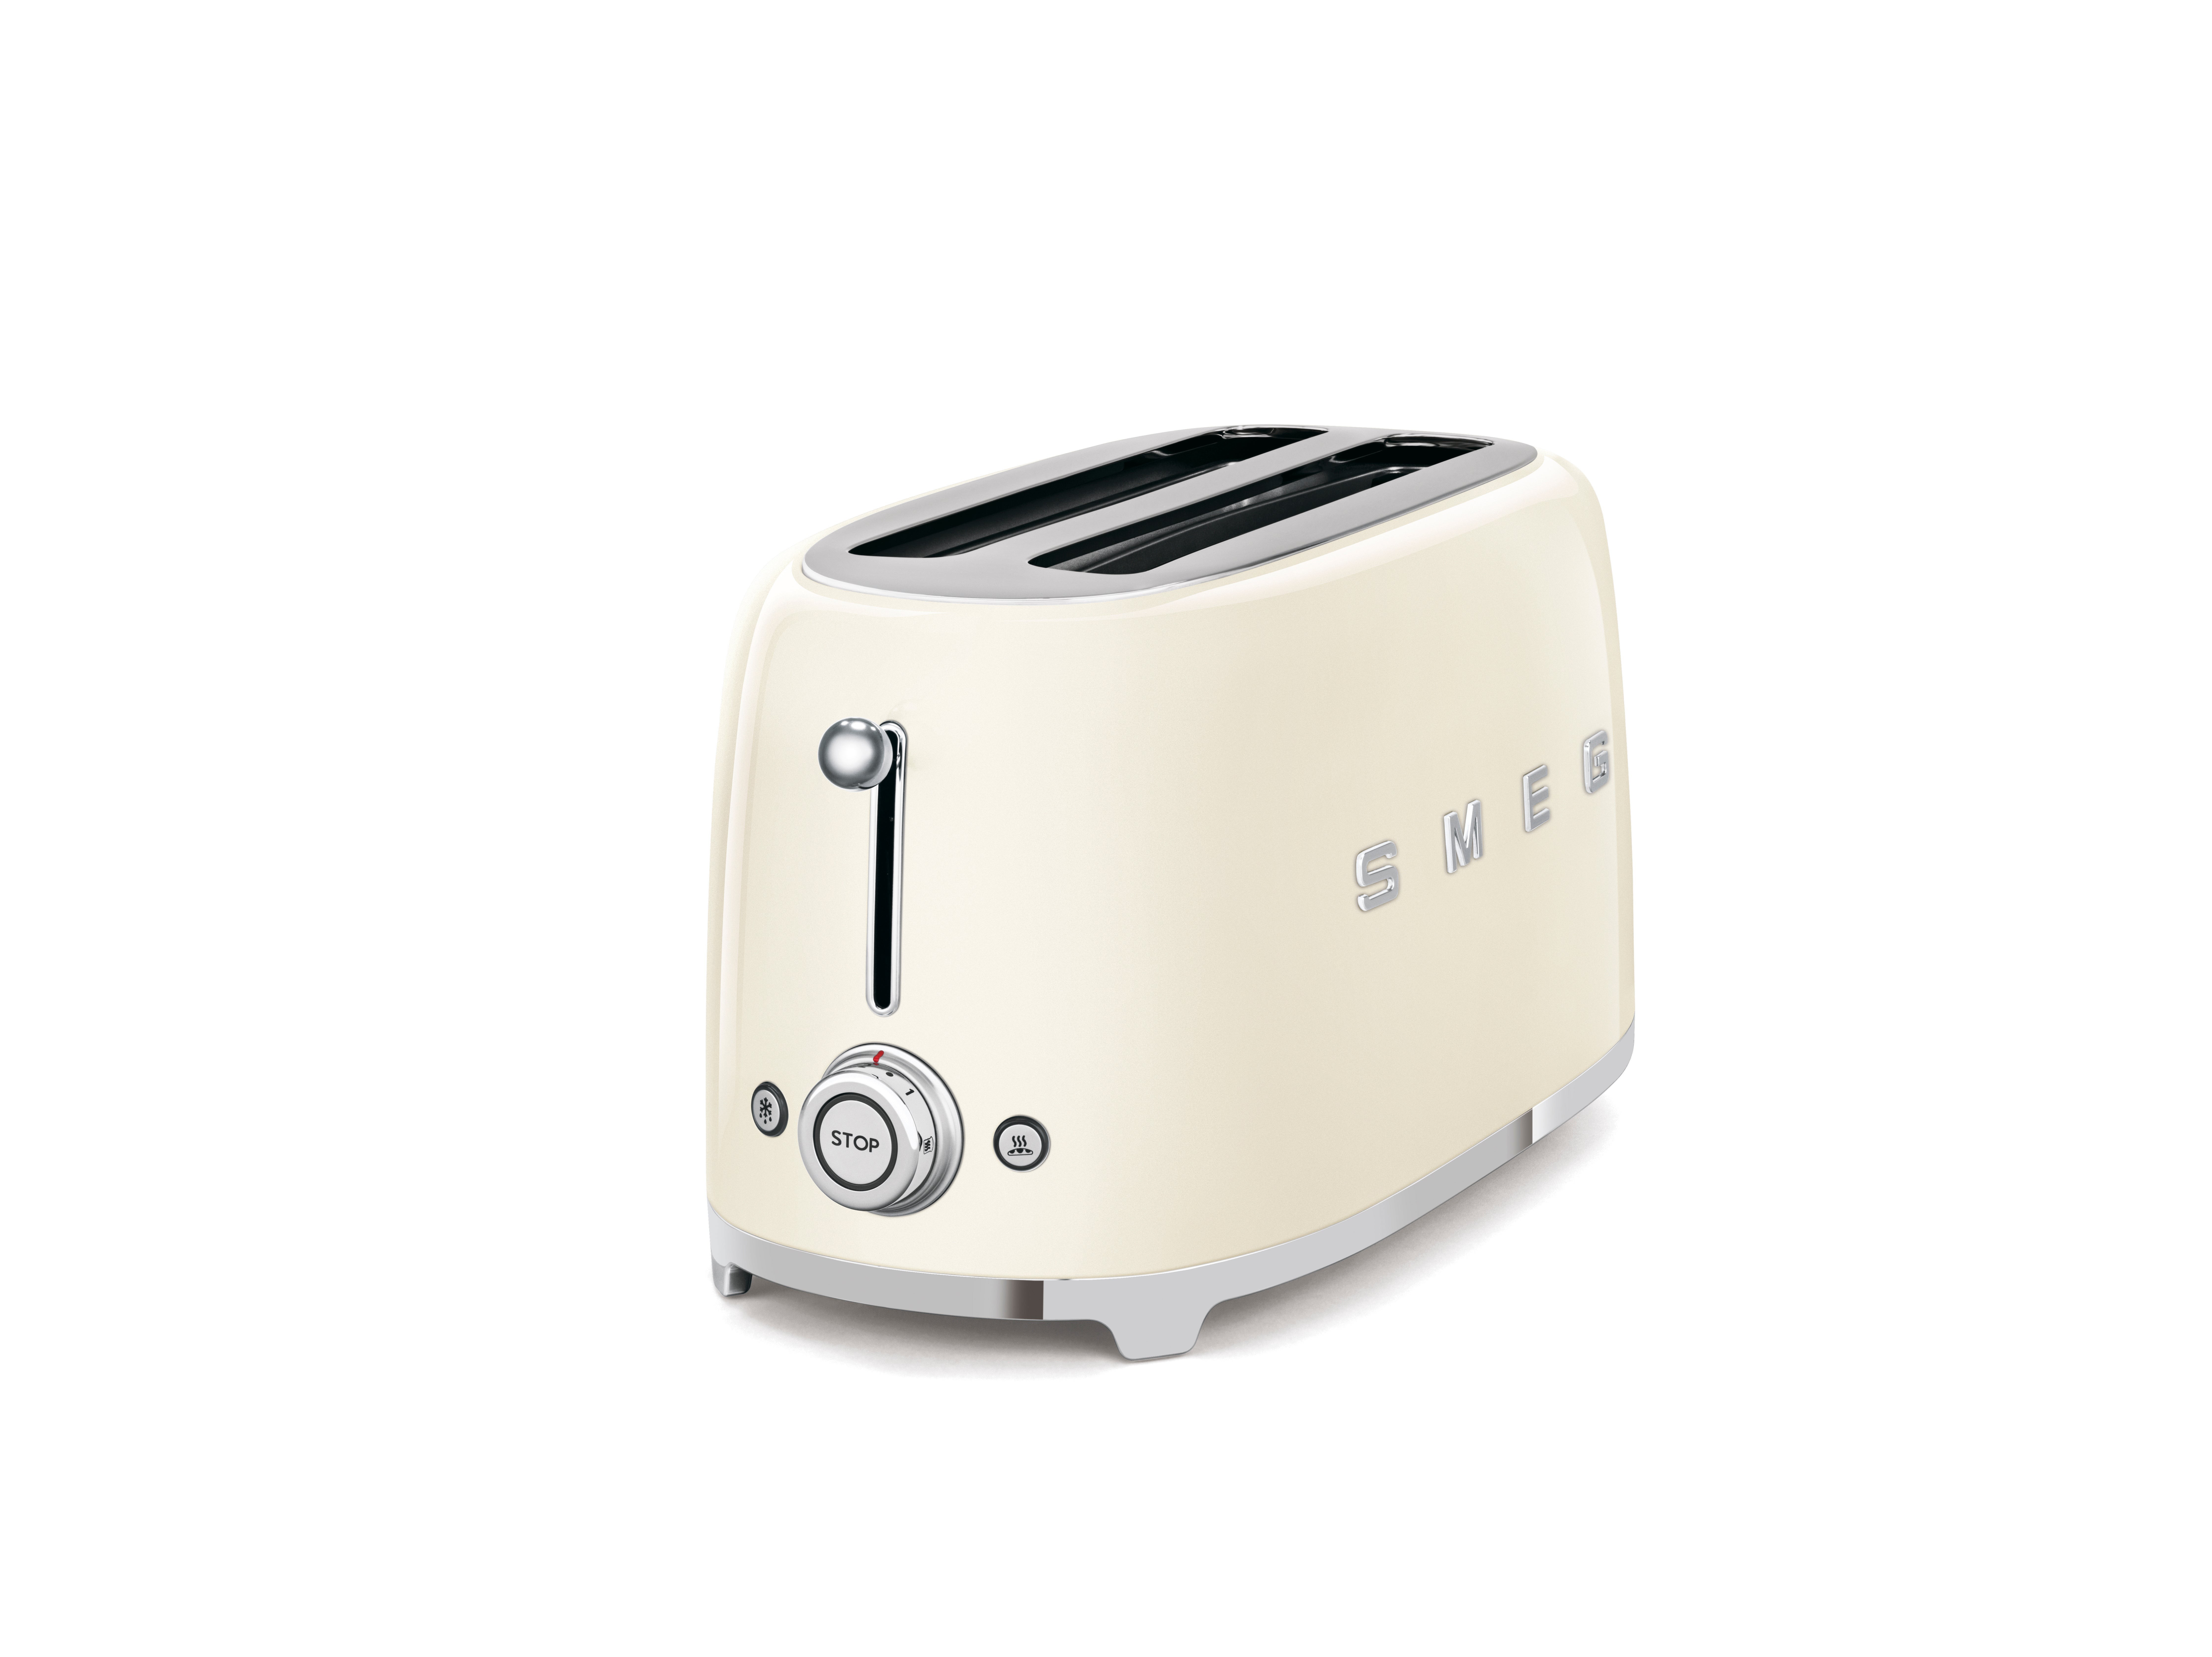 50's Retro Style 2 Slot 4 Slice Toaster, Cream